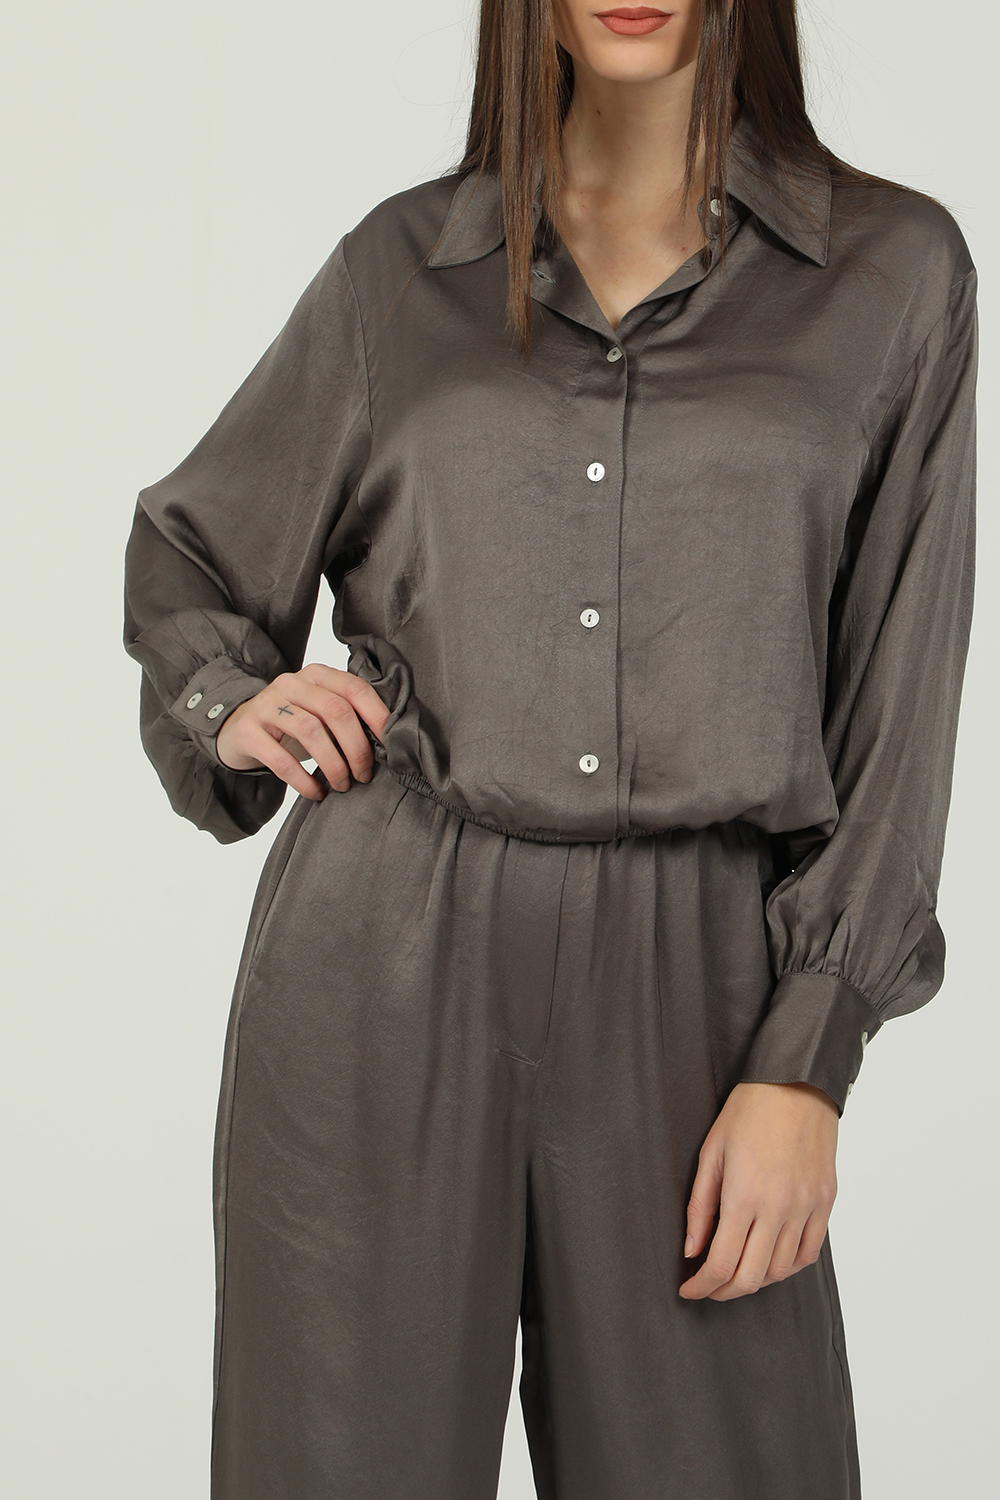 AMERICAN VINTAGE – Γυναικείο πουκάμισο AMERICAN VINTAGE WID06C εκρού μεταλλικό 1821905.0-7M7M